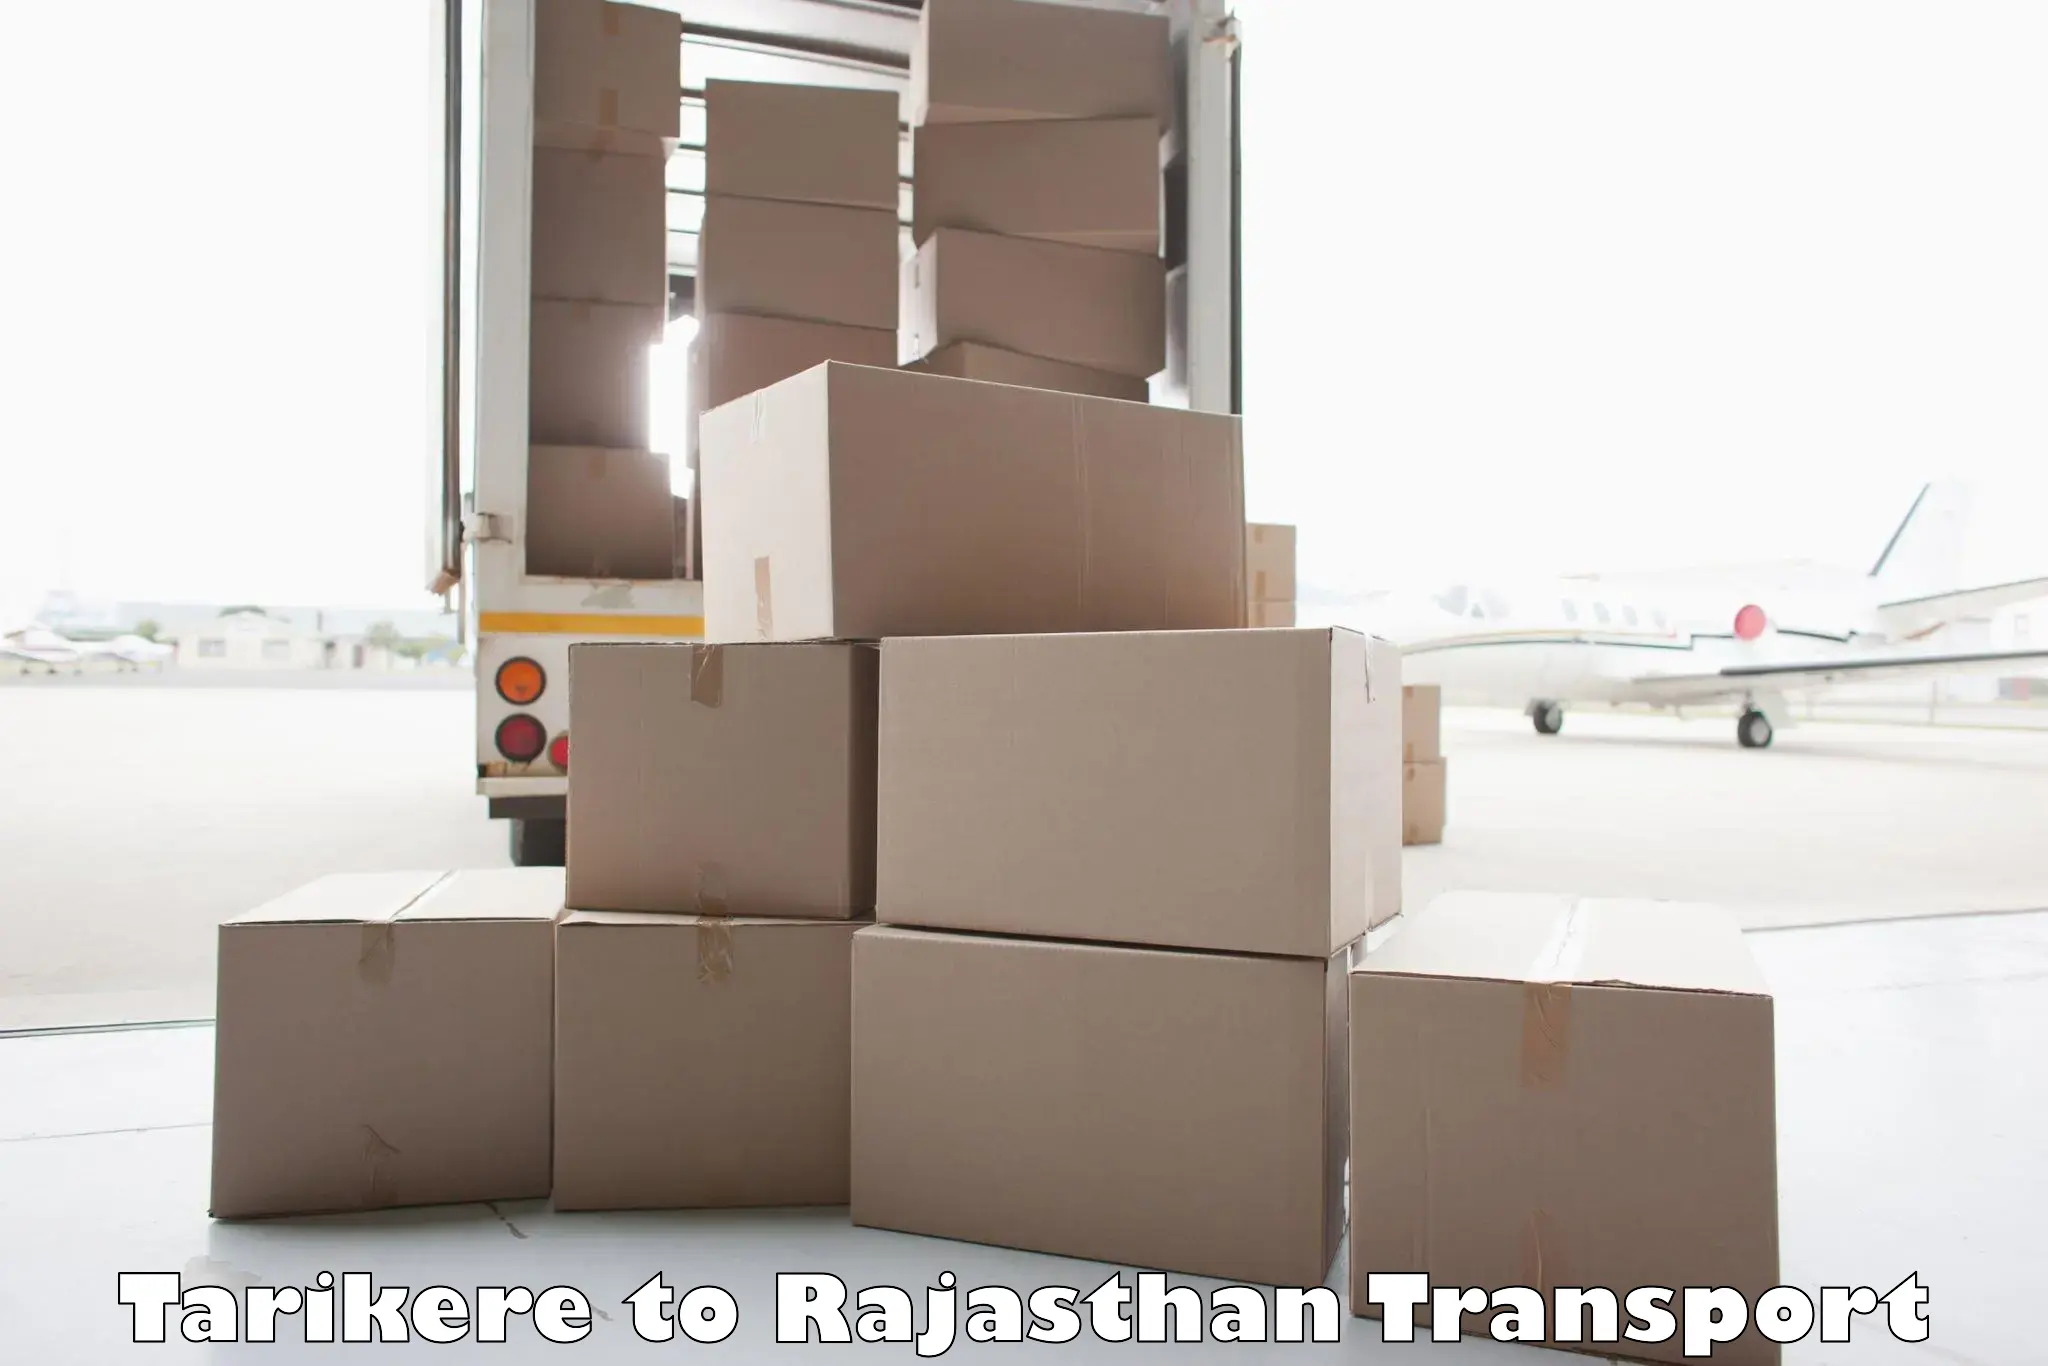 Online transport service Tarikere to Jaipur